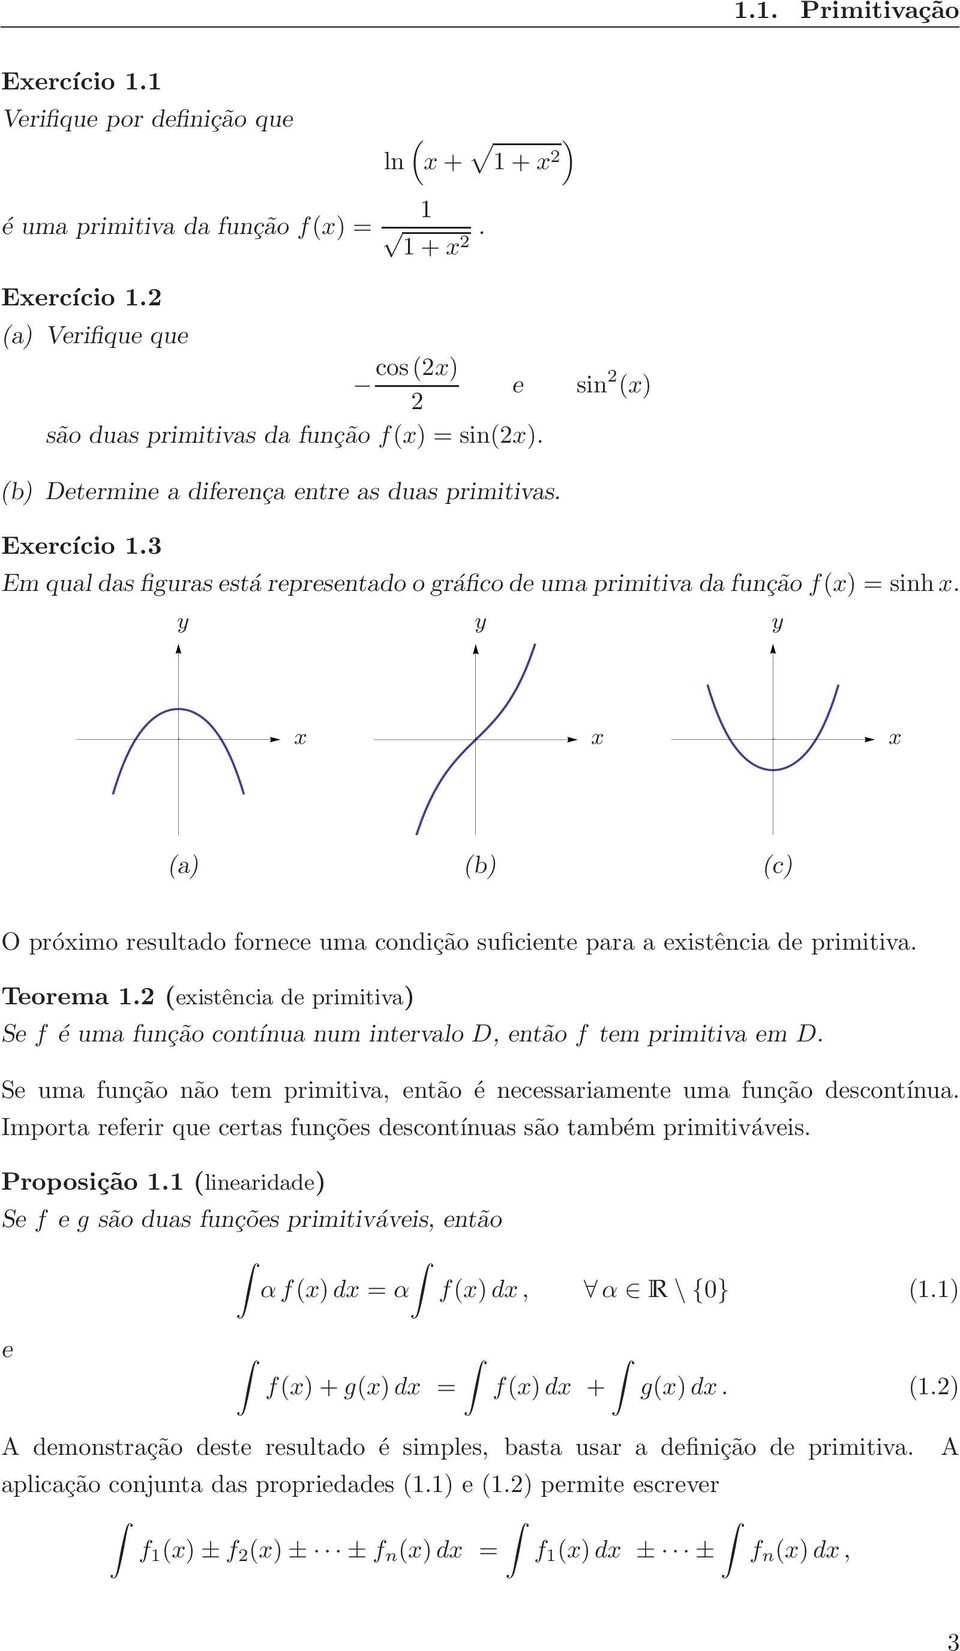 y y y x x x () (b) (c) O próximo resultdo fornece um condição suficiente pr existênci de primitiv. Teorem.2 (existênci de primitiv) Se f é um função contínu num intervlo D, então f tem primitiv em D.